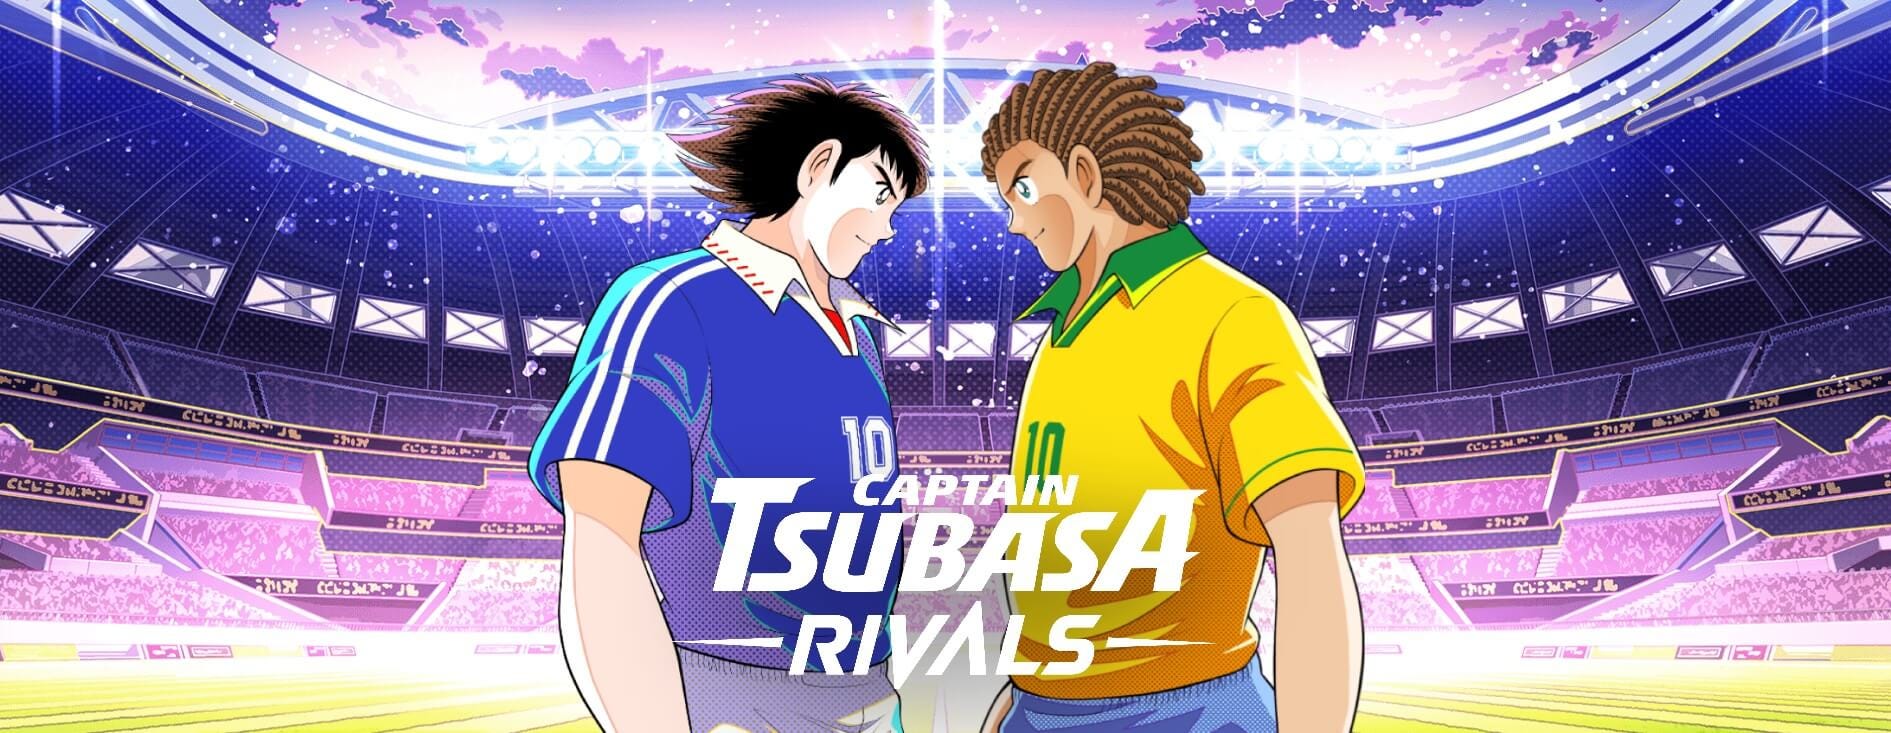 Captain Tsubasa – Rivals Blockchain Game Announced